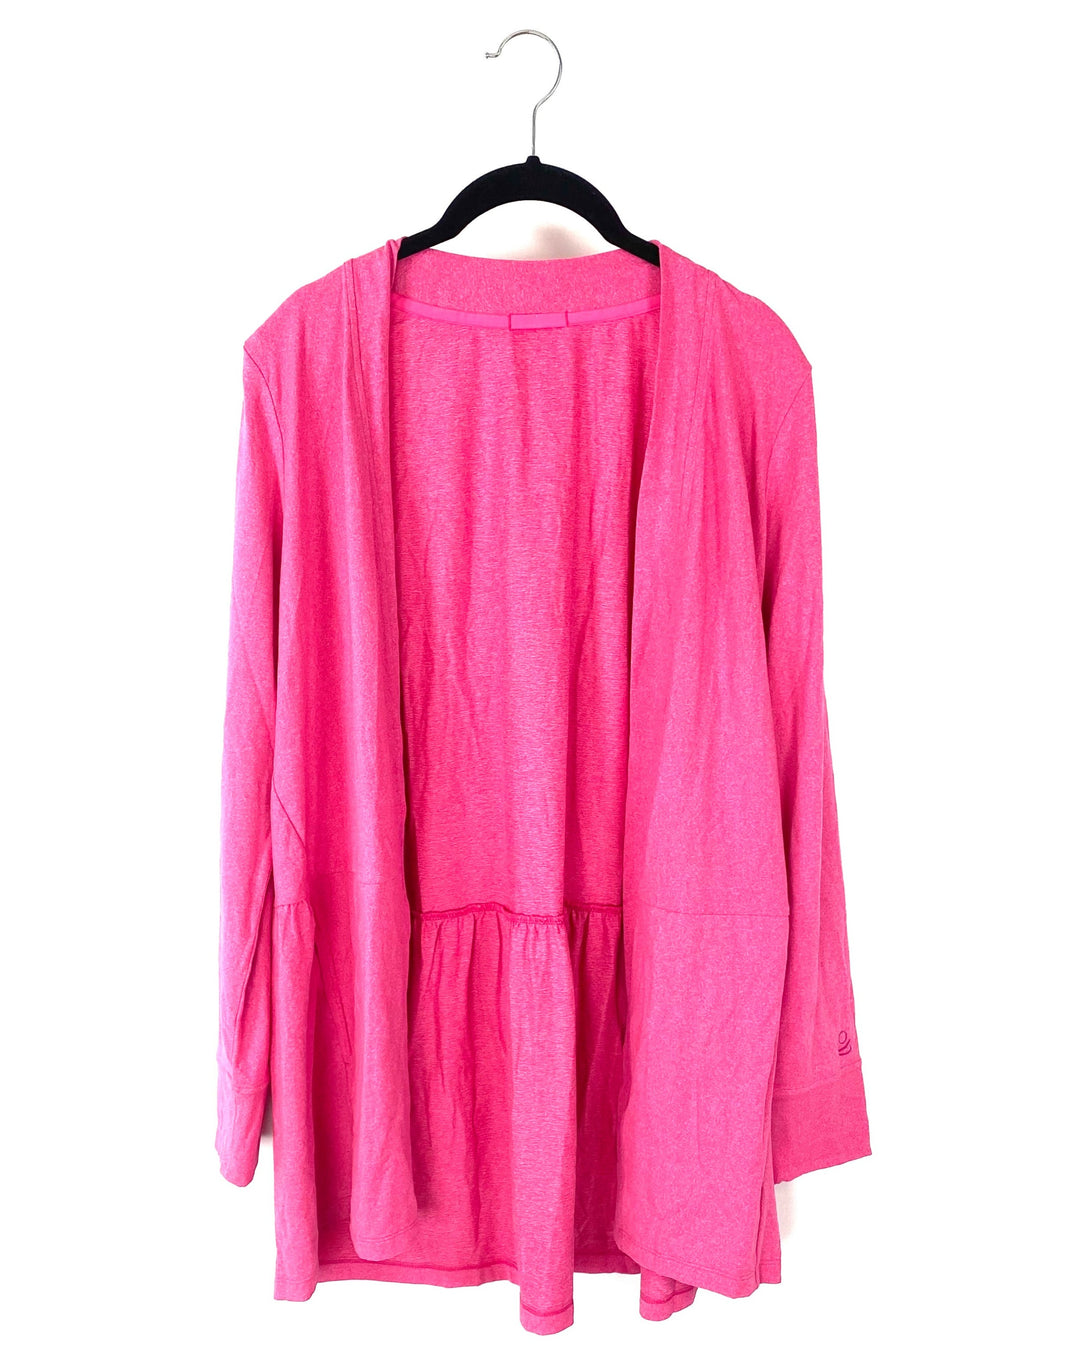 Pink Long Sleeve Cardigan - Size 6/8